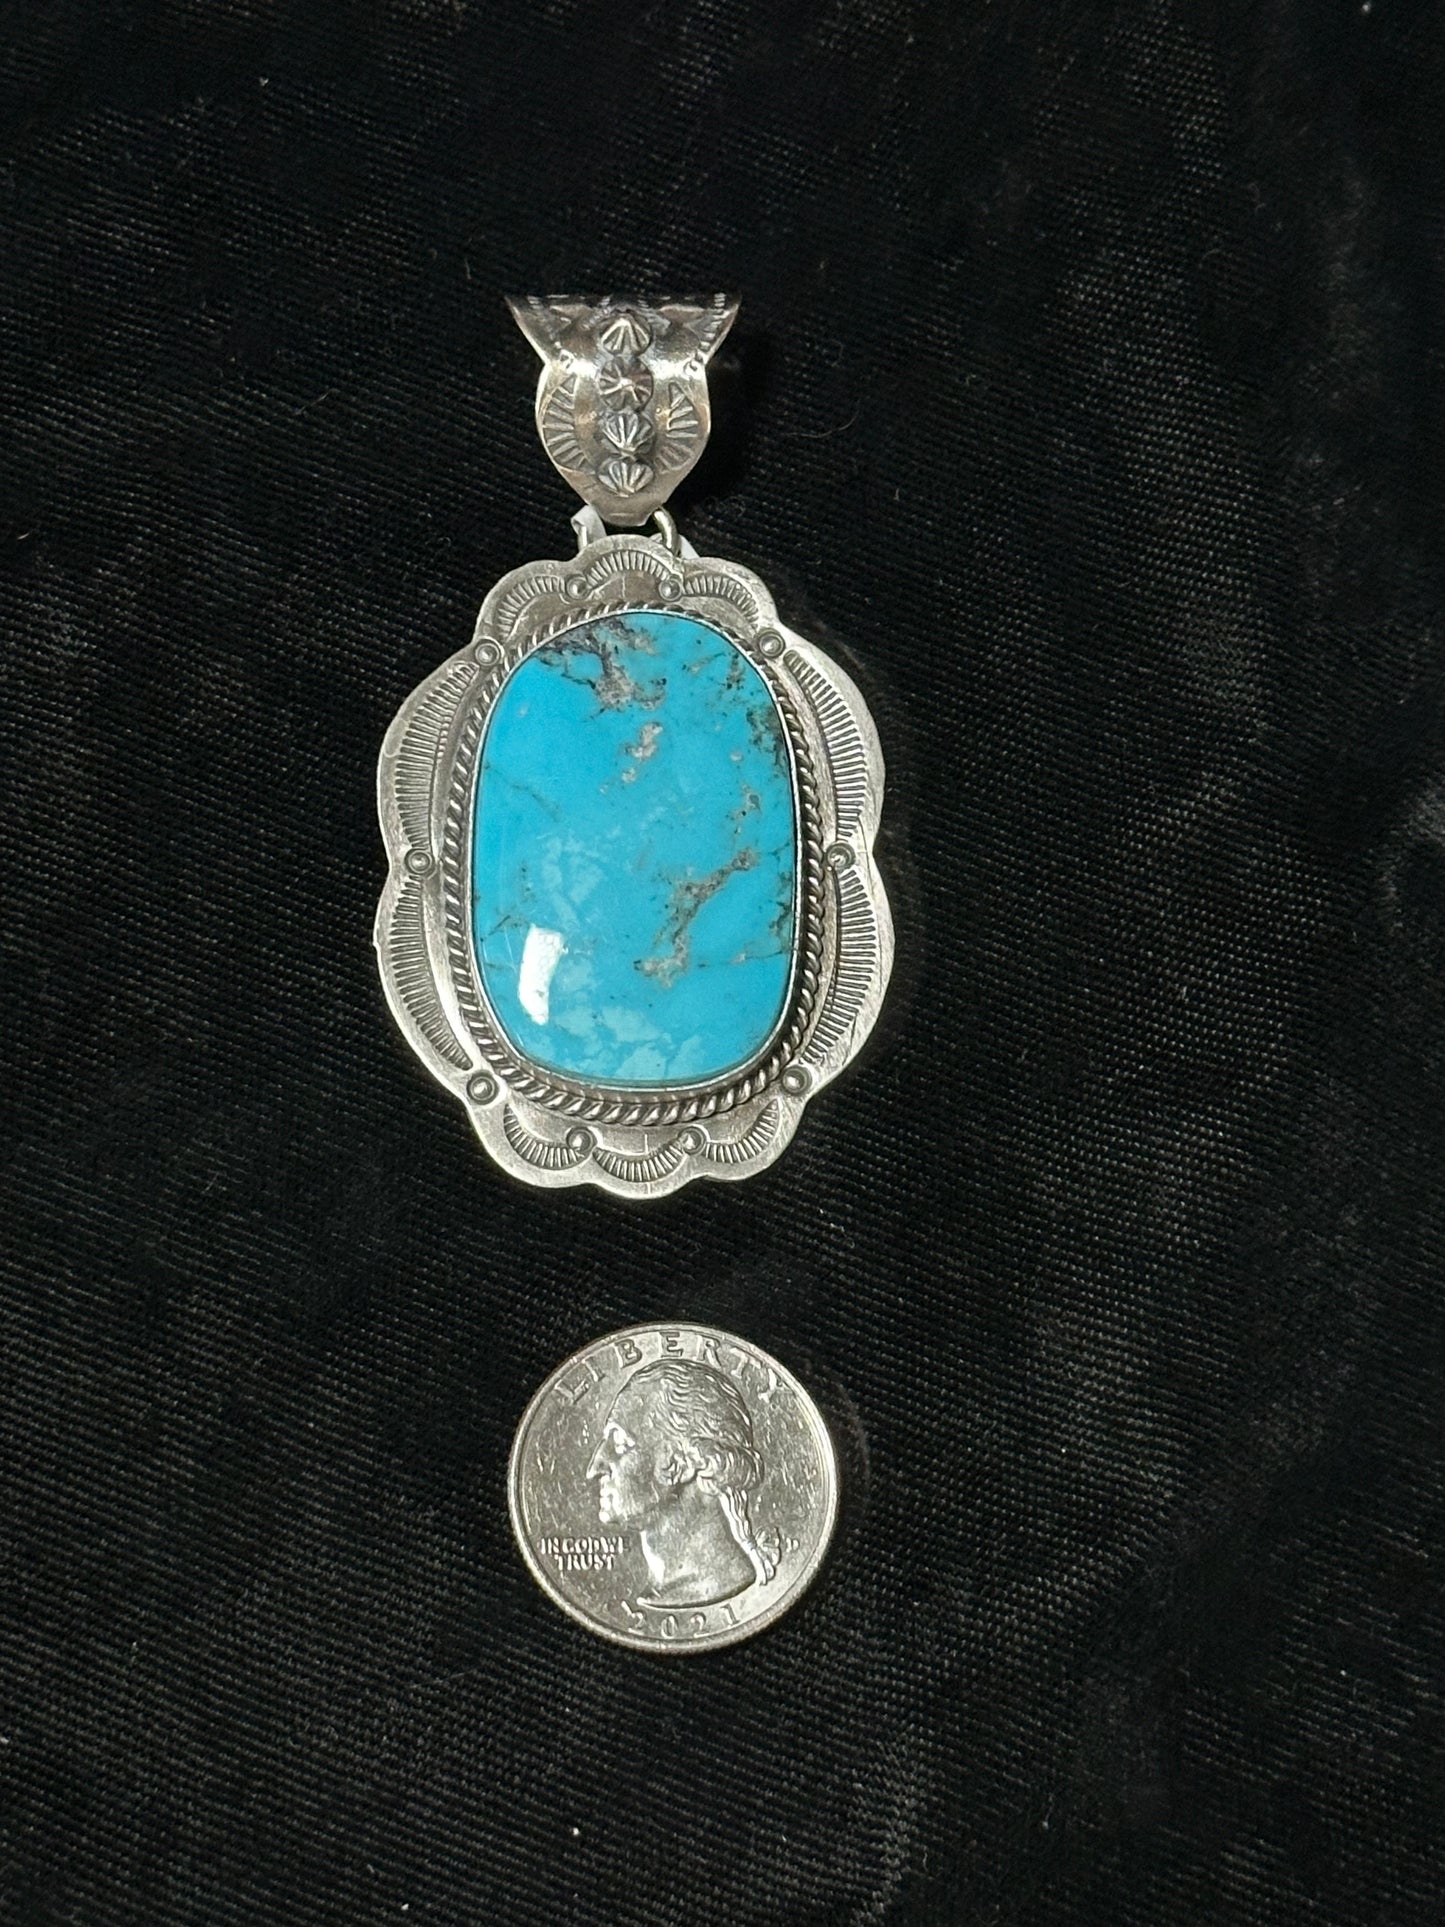 Kingman Turquoise Pendant by John Nelson